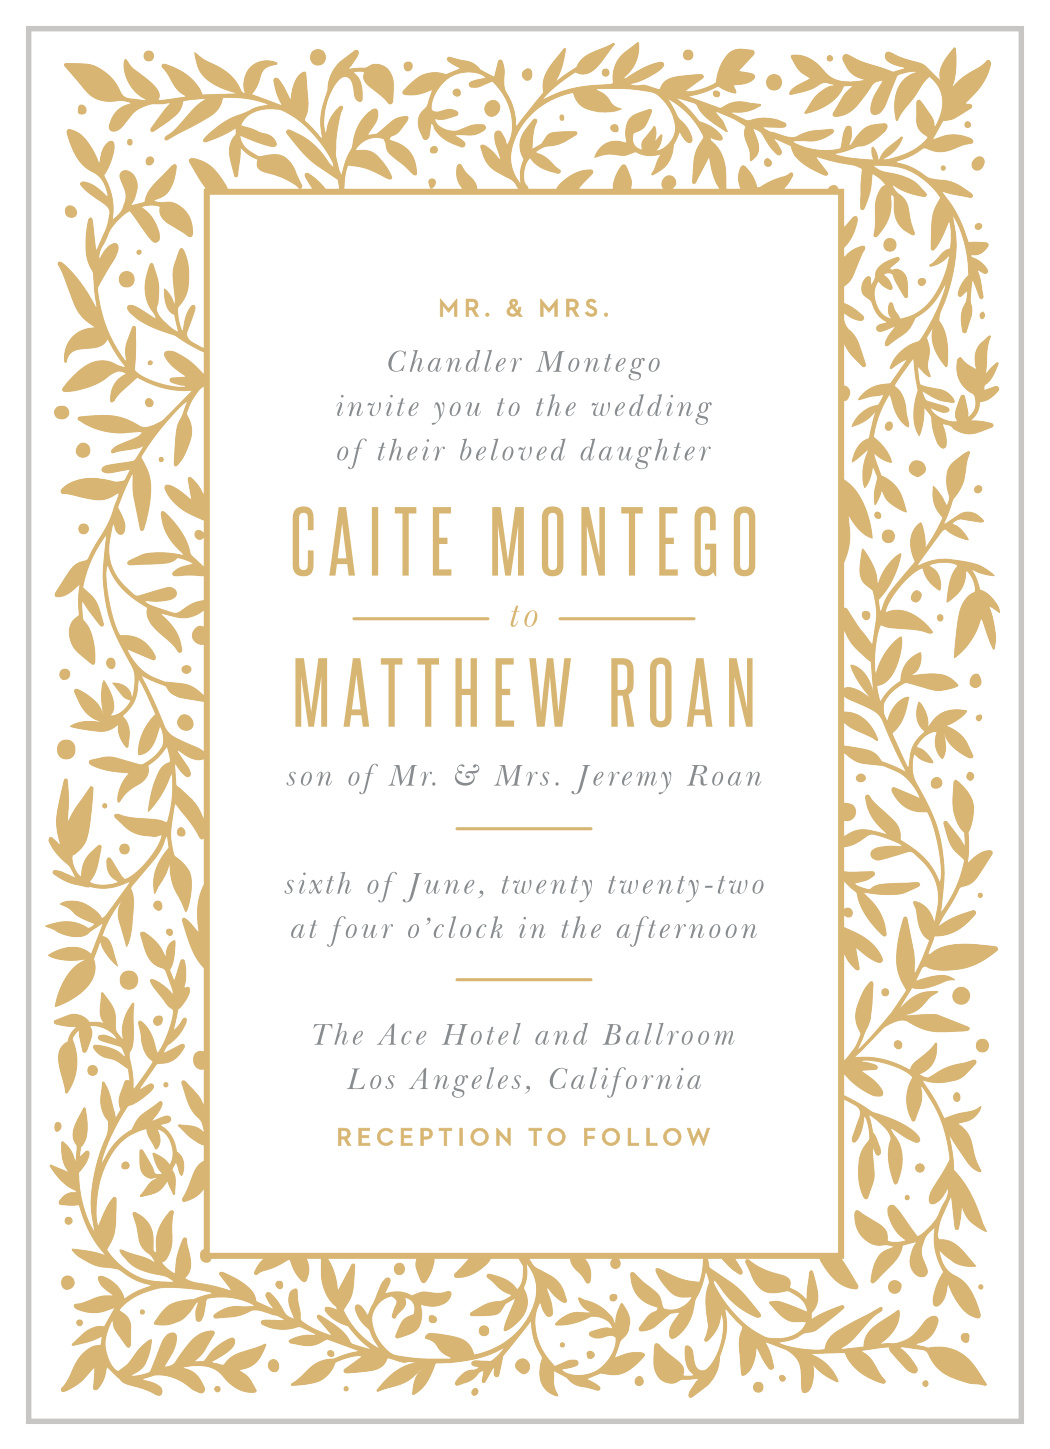 Medieval Library Wedding Invitations